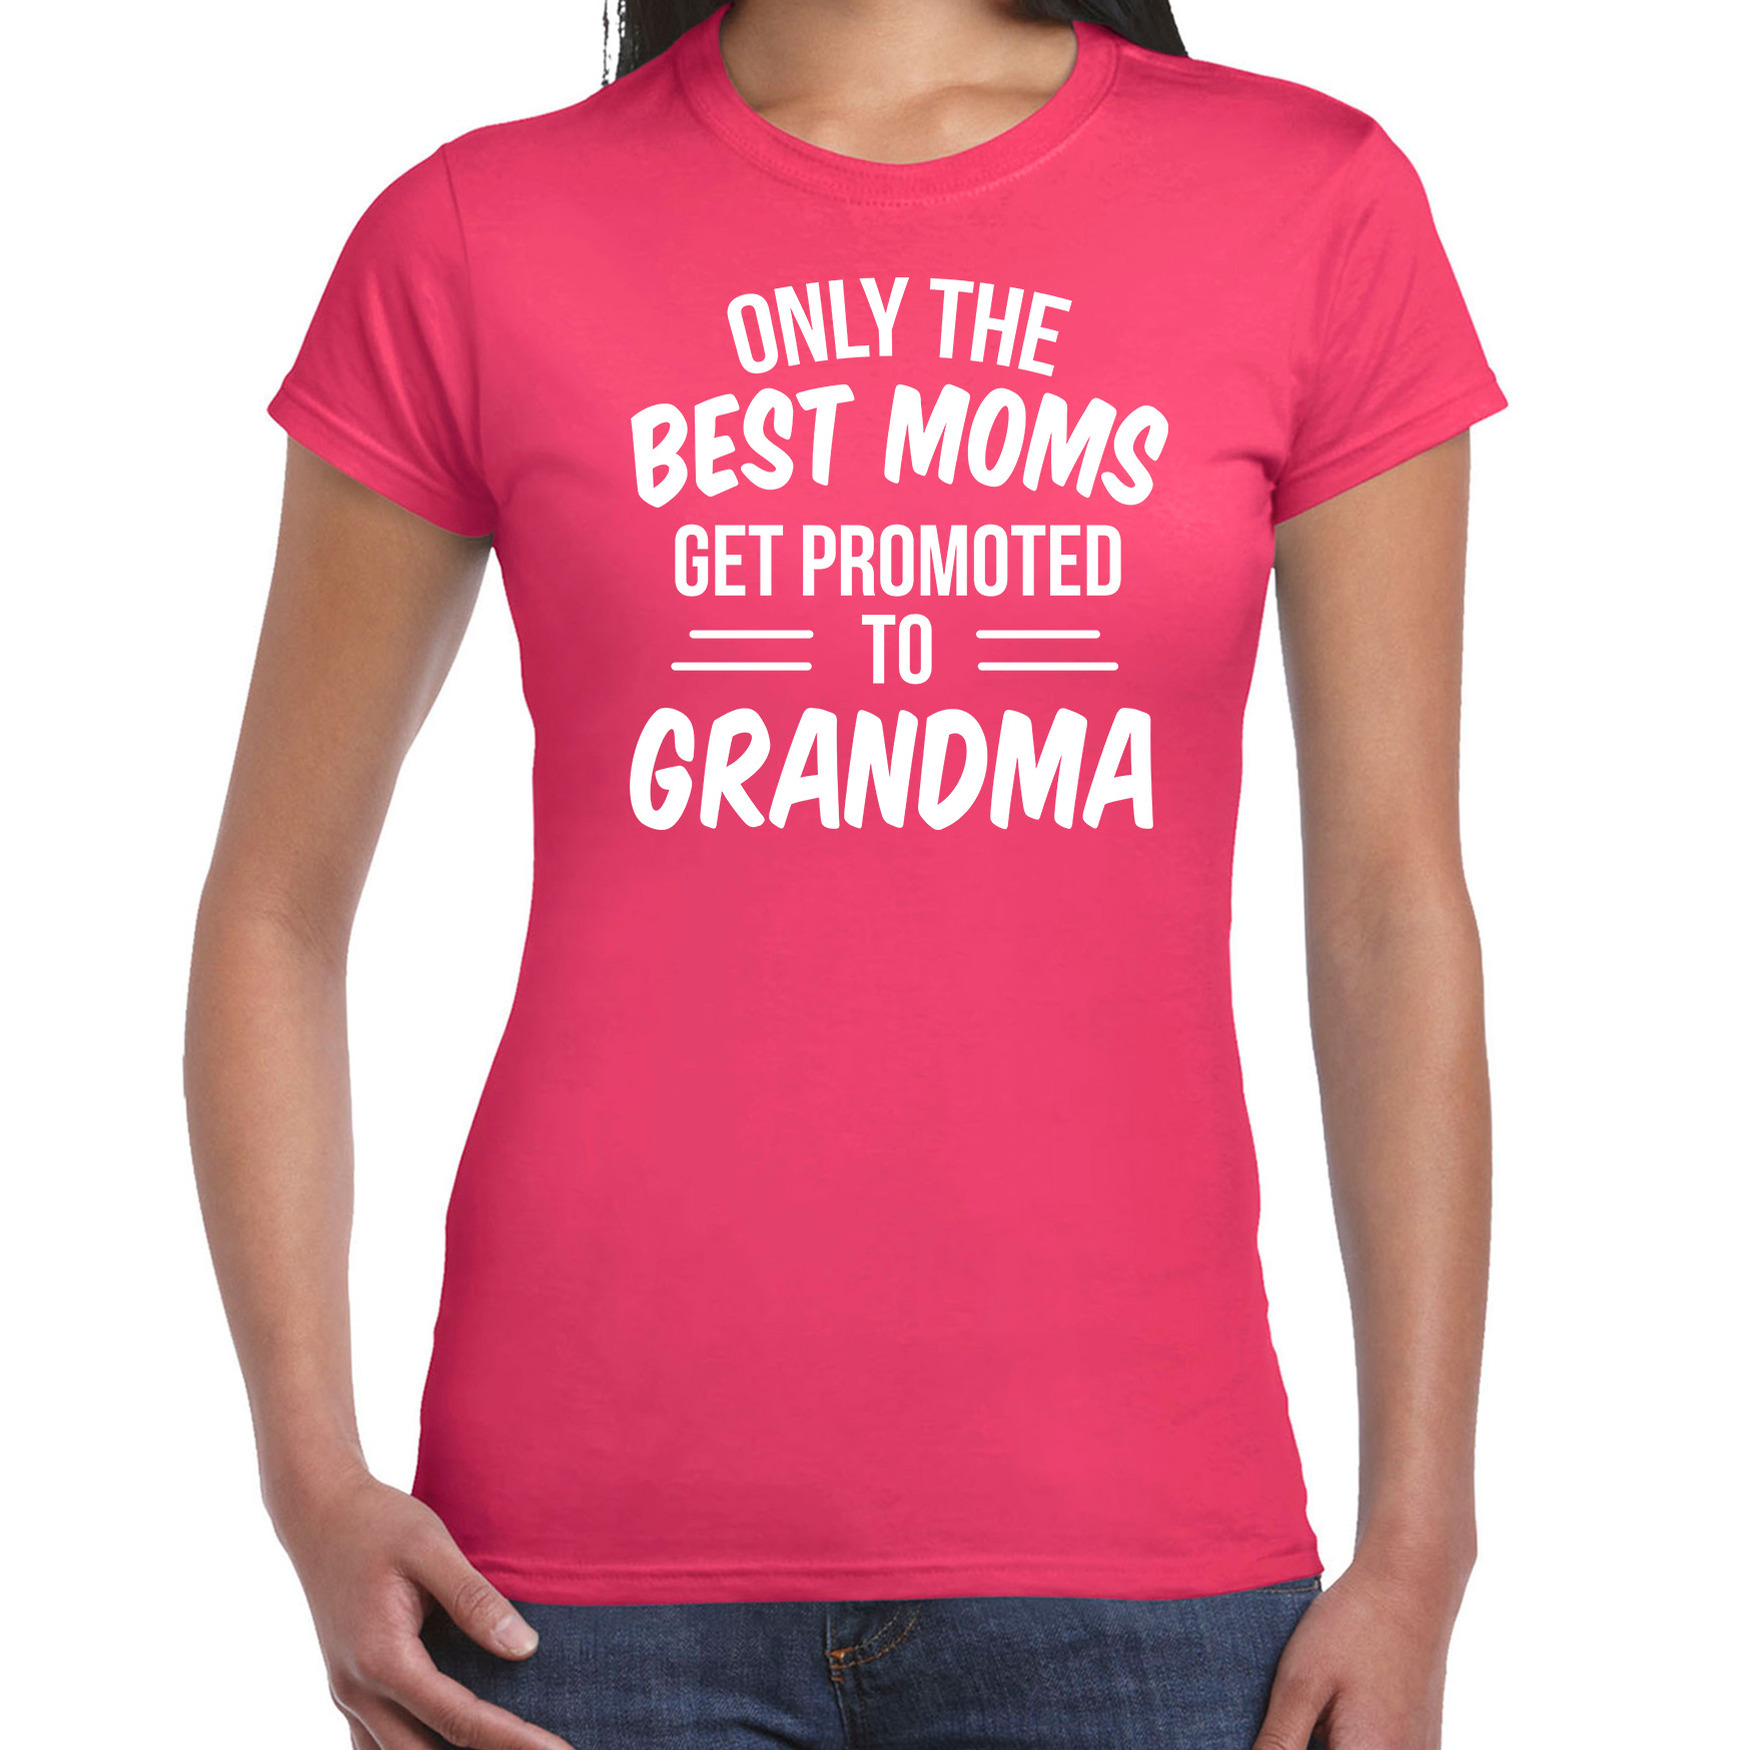 Only the best moms get promoted to grandma t-shirt fuchsia roze dames Aankondiging zwangerschap